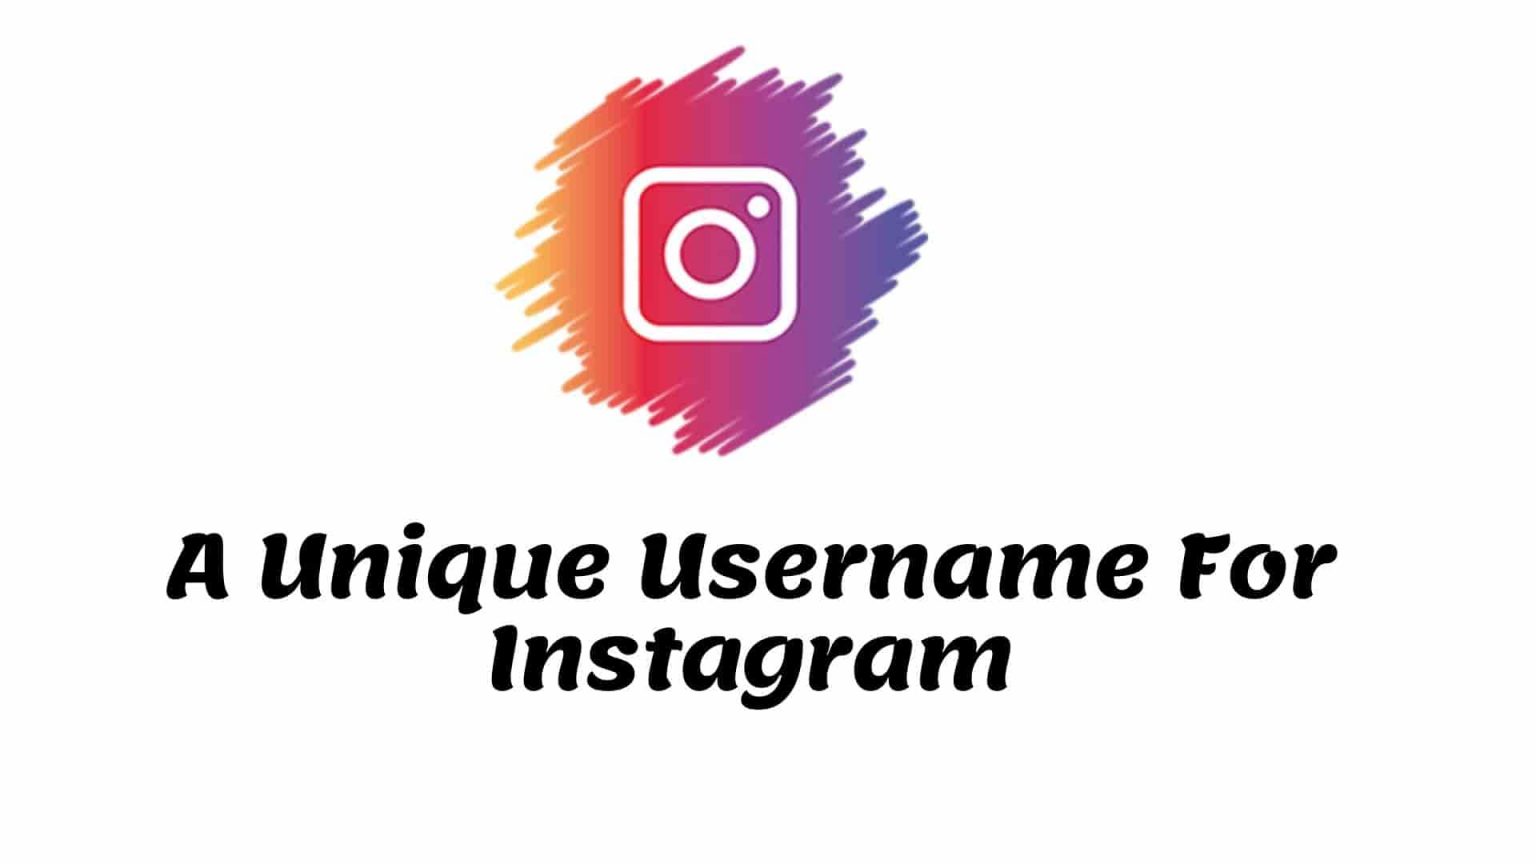 【620+NEW】 Best Unique Username Ideas For Instagram For Boys & Girls ...